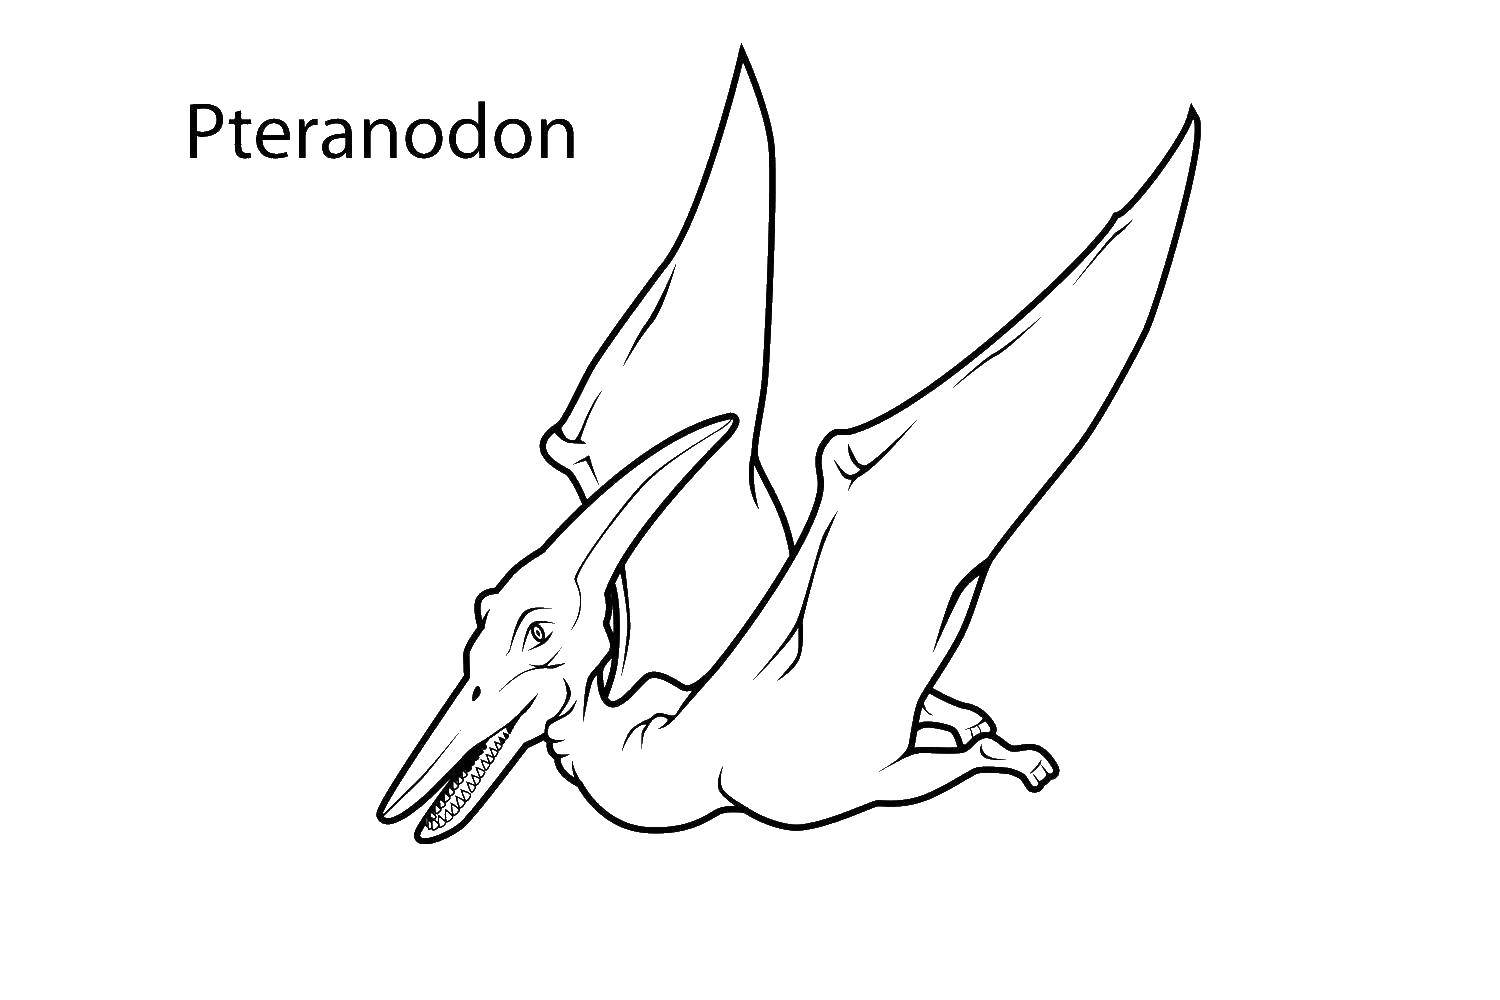 Coloring Pteranodon. Category dinosaur. Tags:  Dinosaurs.